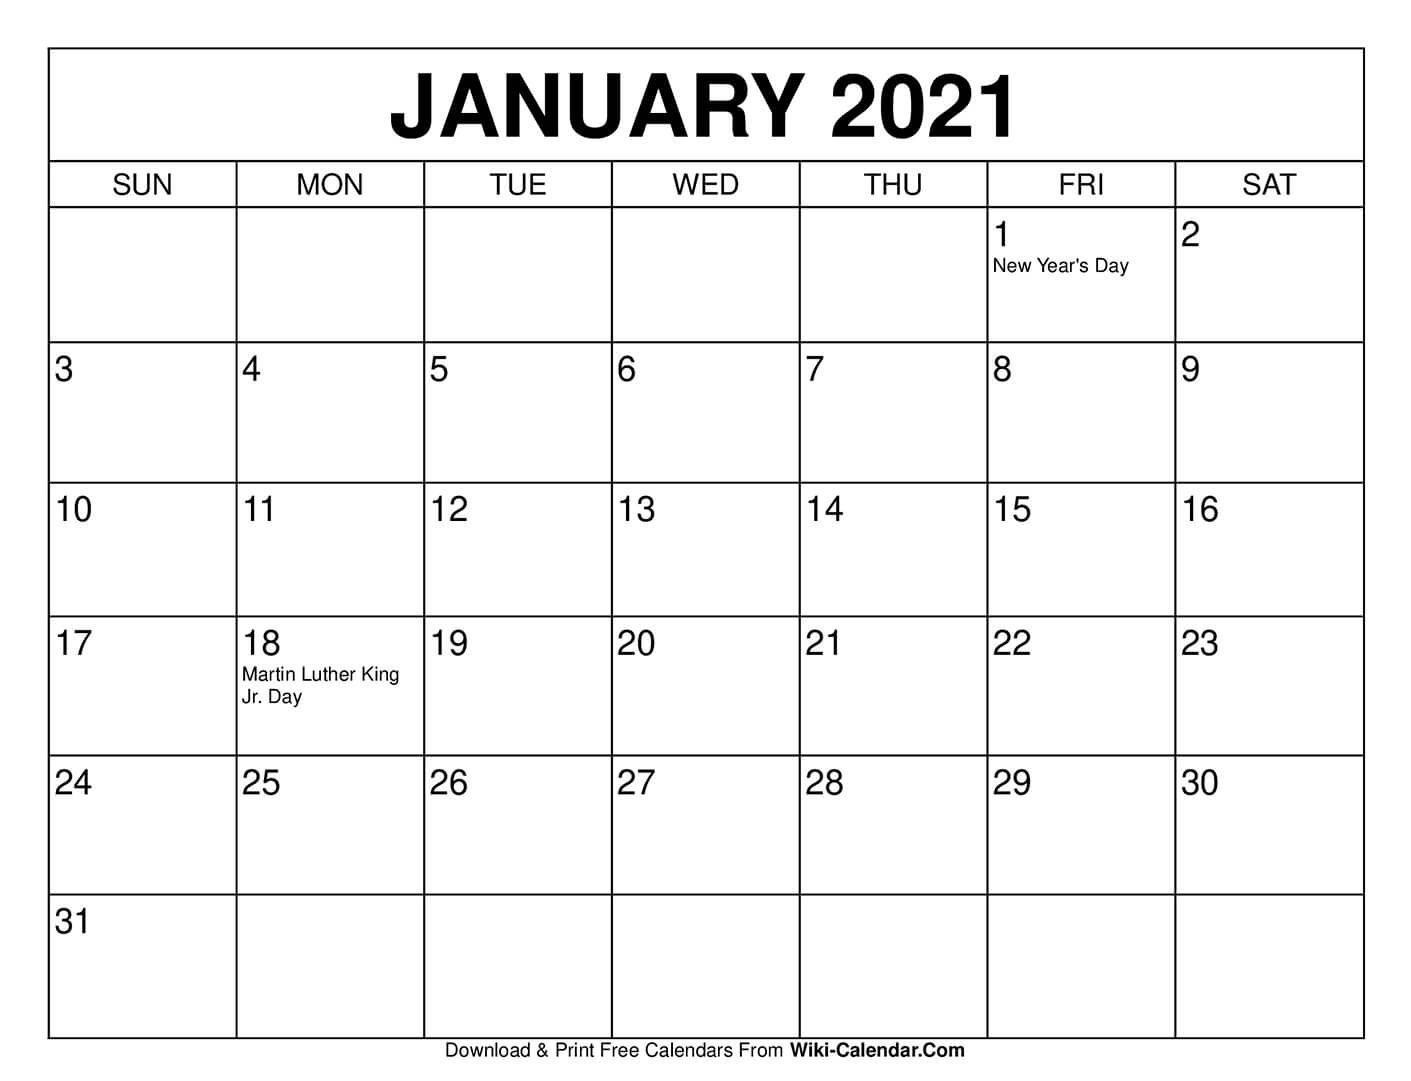 August 2021 Printable Calendar Wiki | Printable March